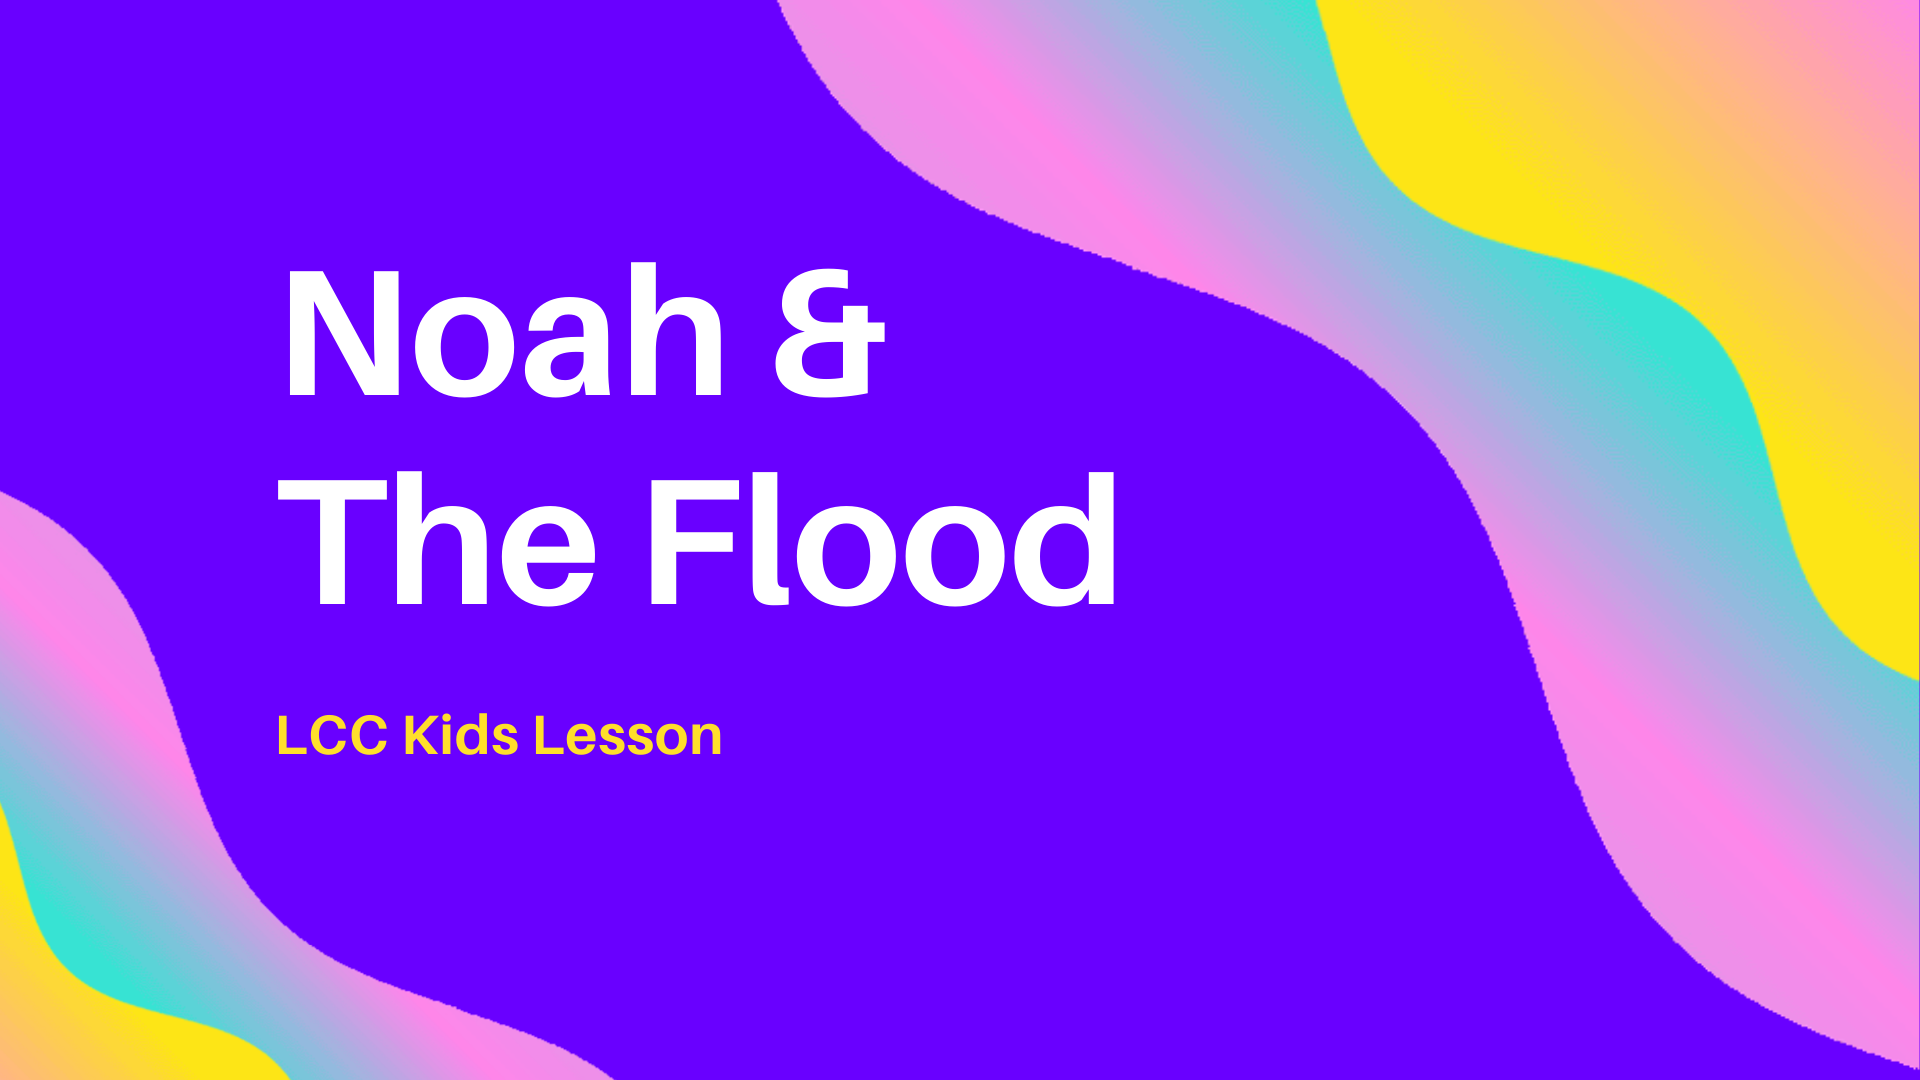 Noah & The Flood